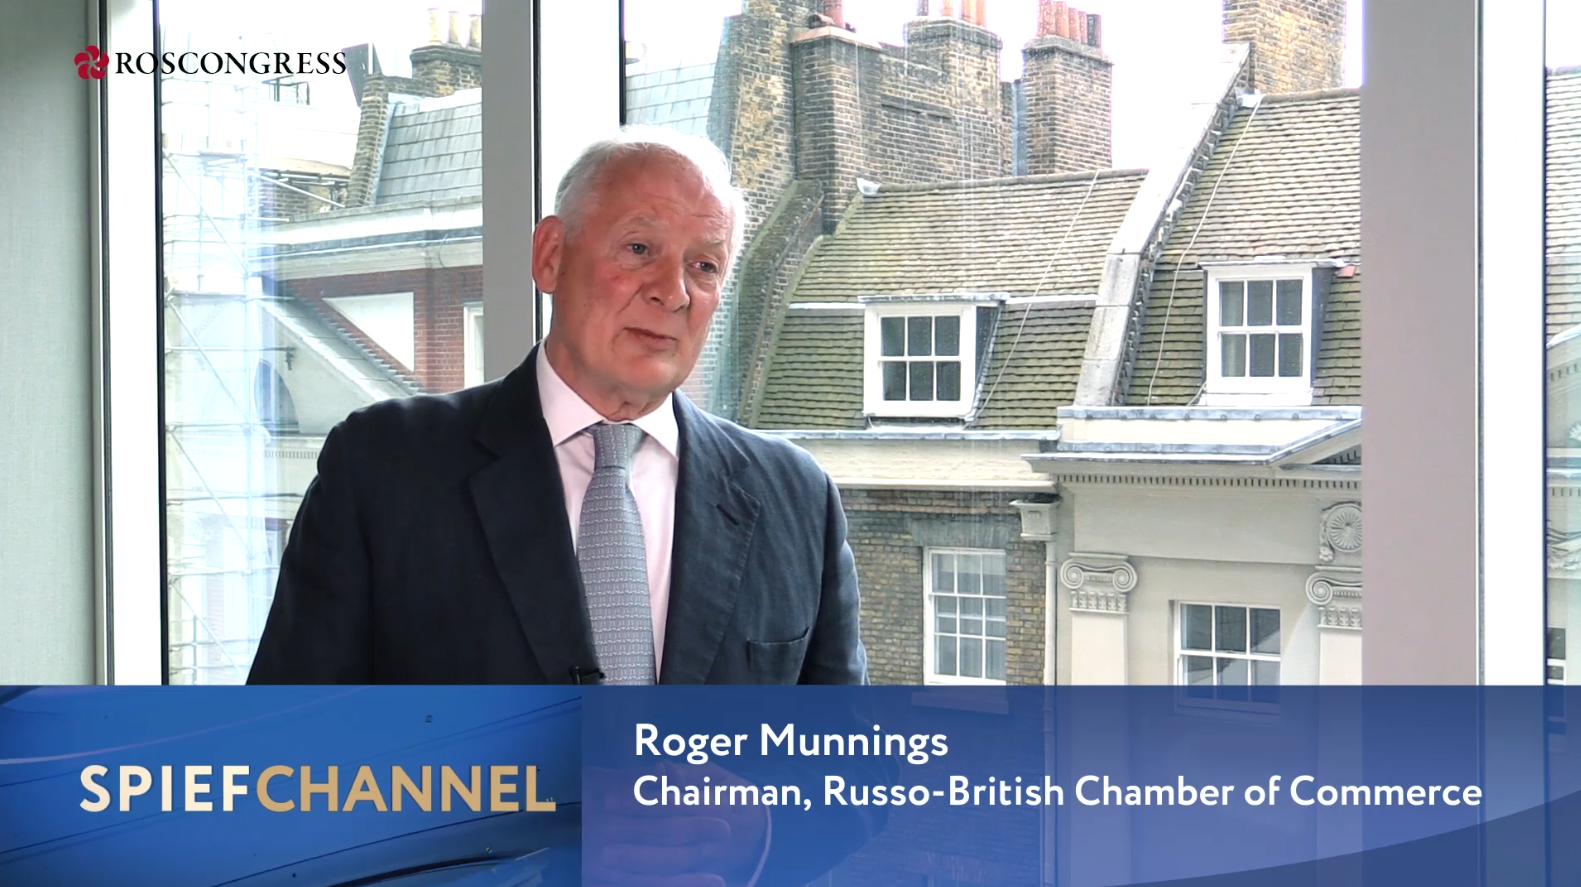 Roger Munnings, Chairman, Russo-British Chamber of Commerce